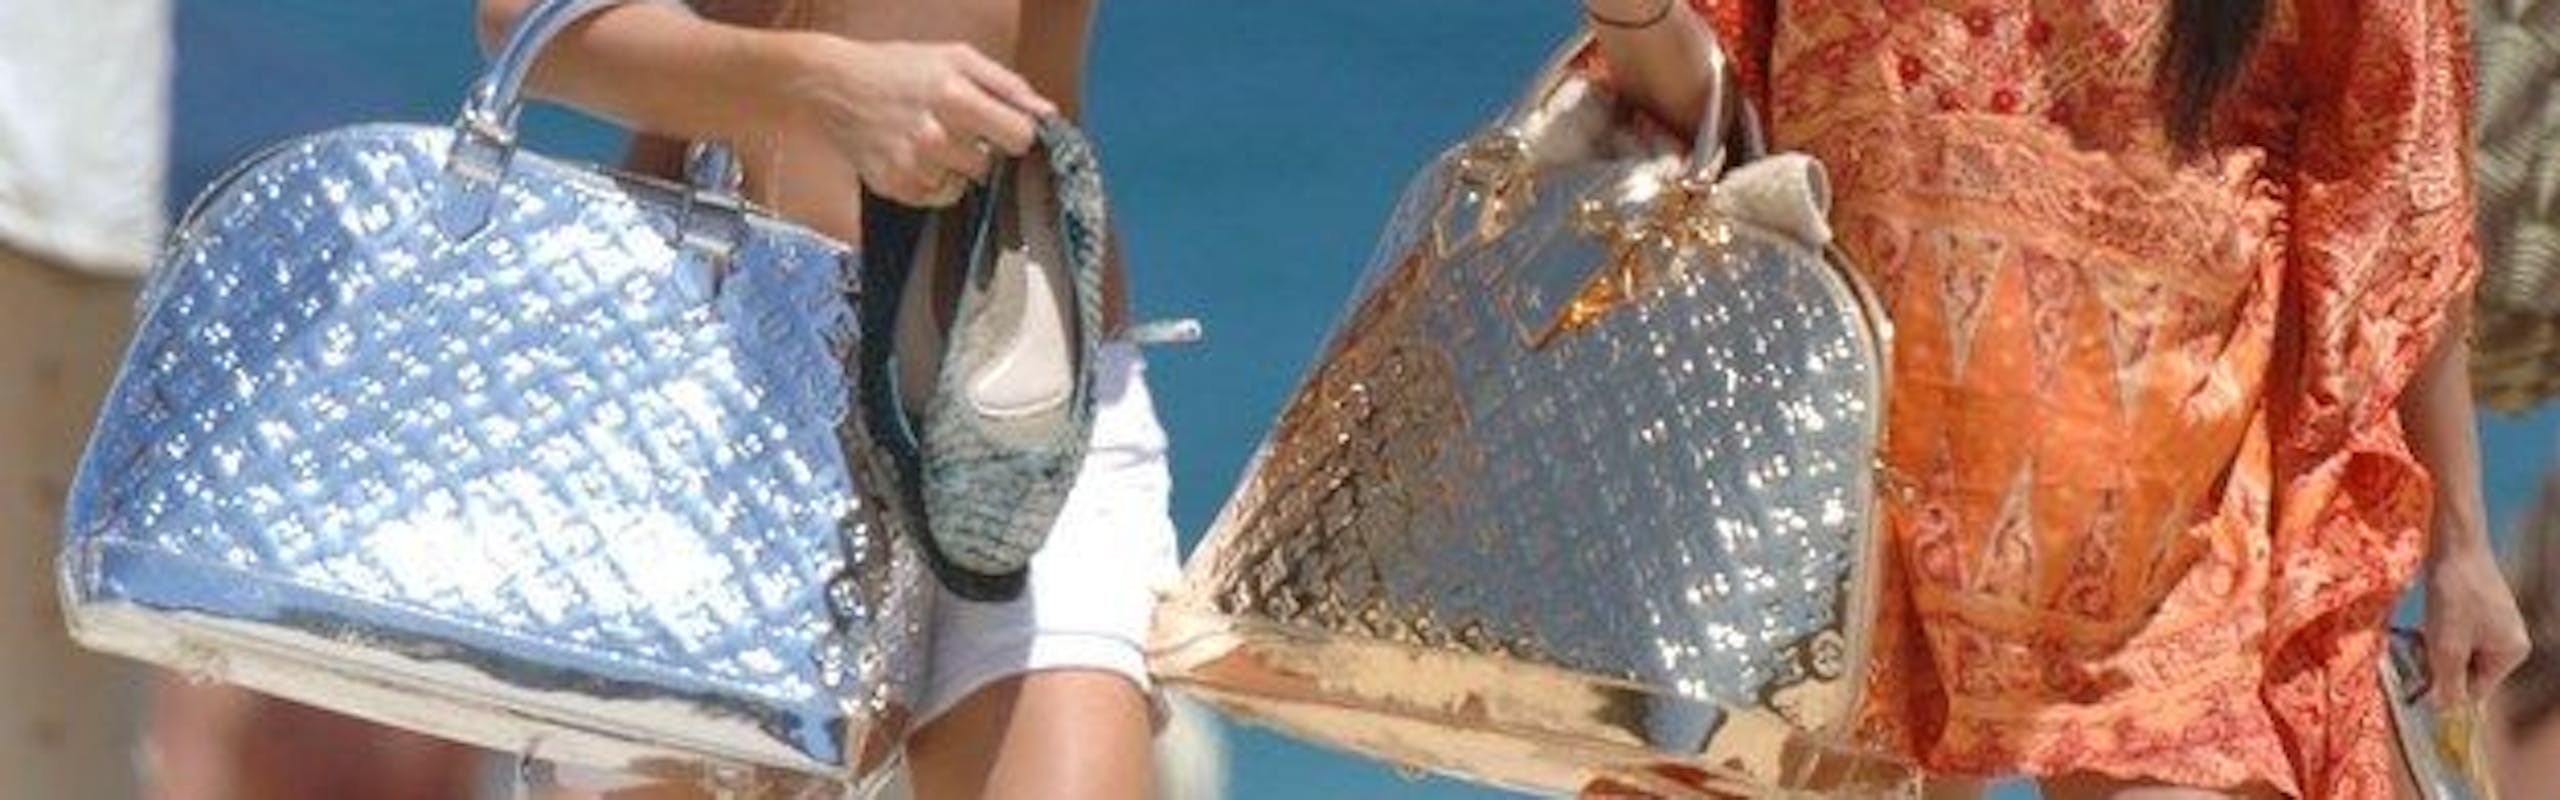 Paris Hilton louis vuitton handbag